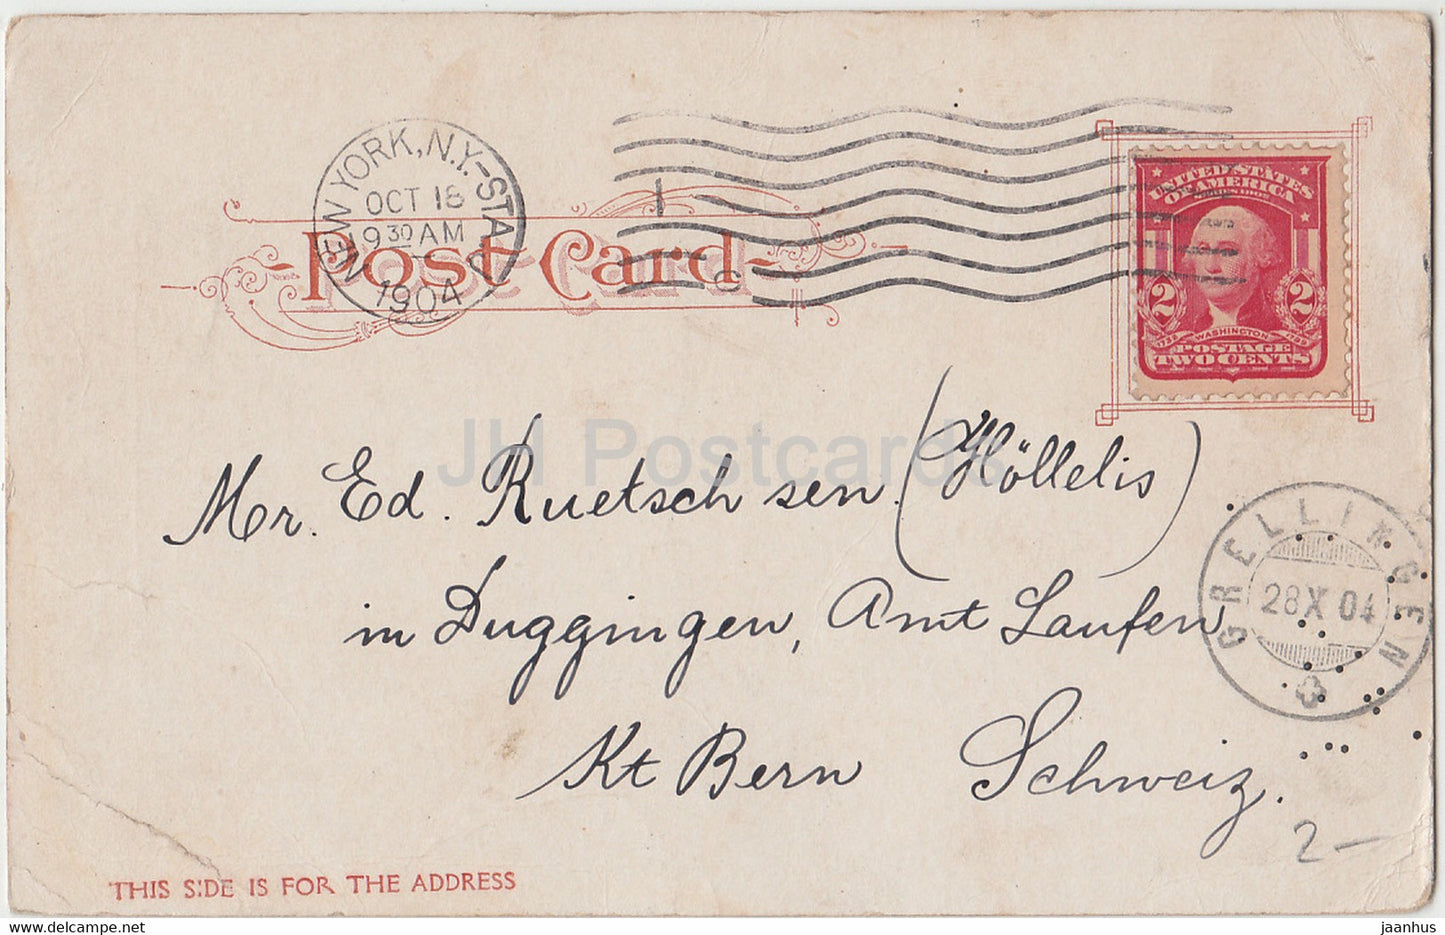 New York - Hanover Bank Building - 149 - carte postale ancienne -1904 - États-Unis - USA - utilisé